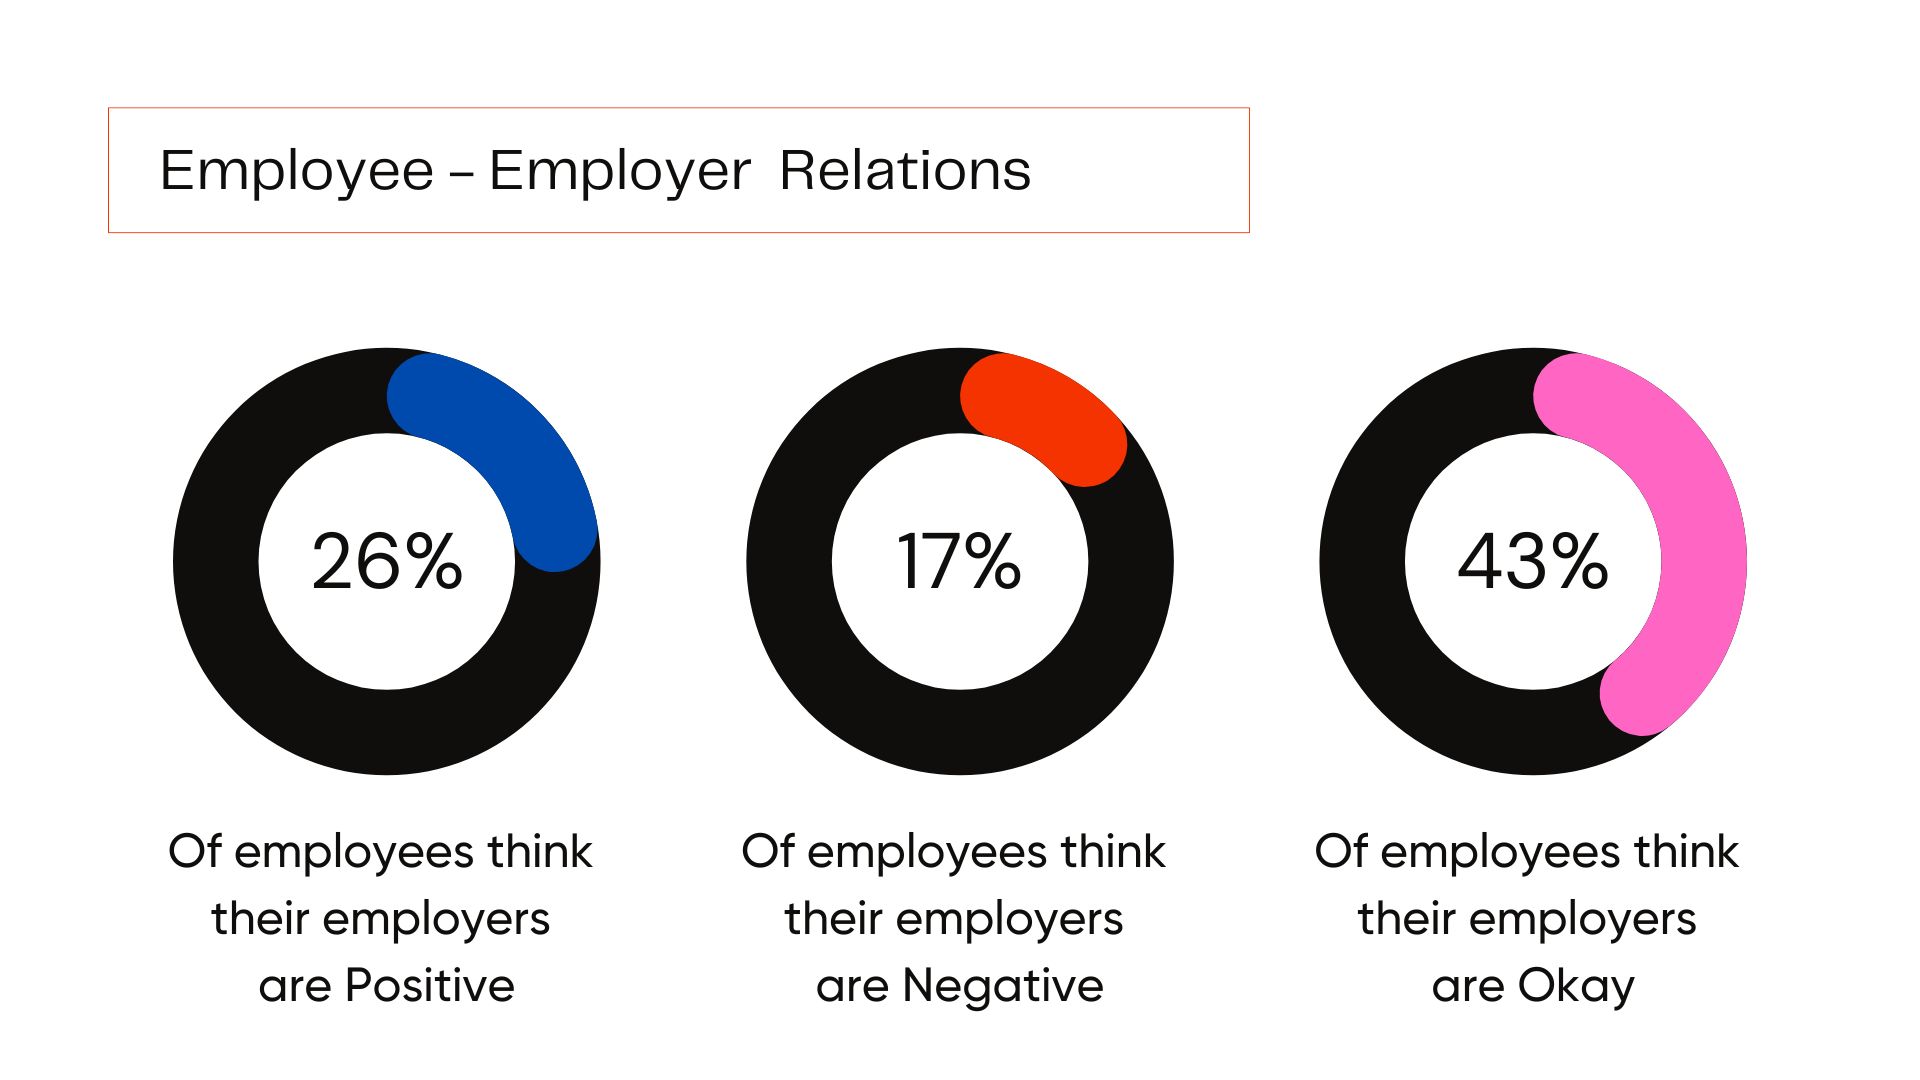 Employee - Employer Relations